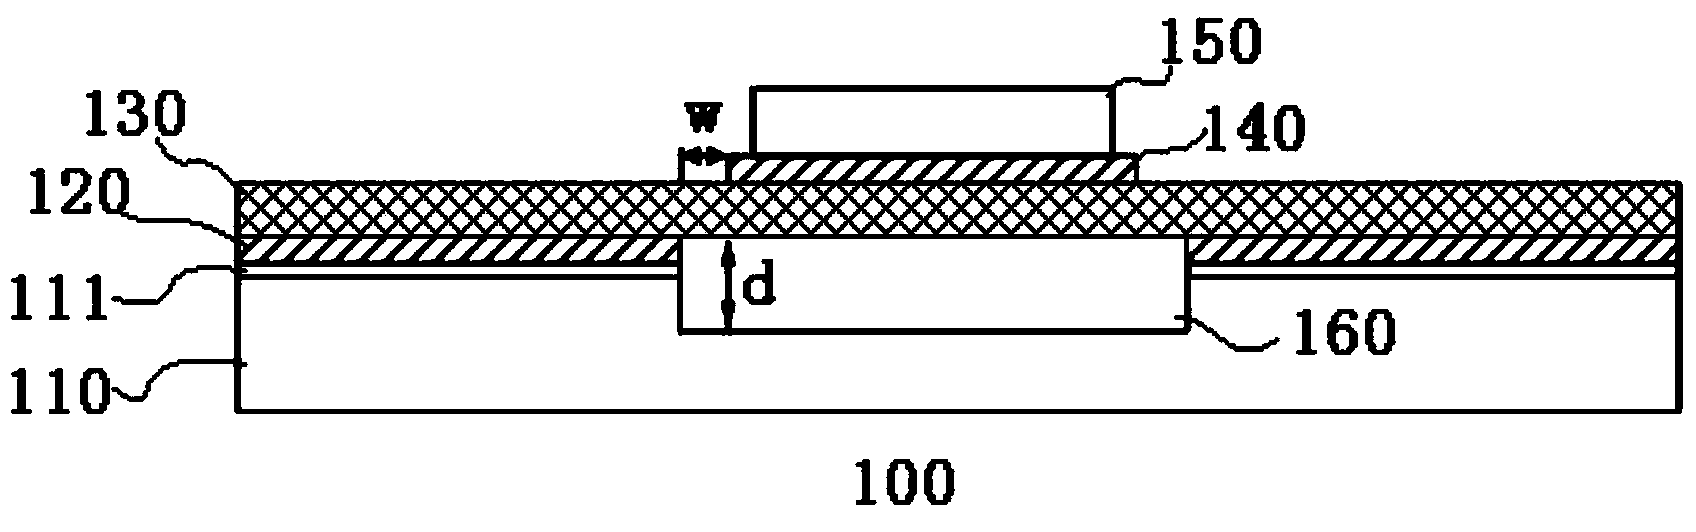 IGBT (insulated gate bipolar transistor) modular structure